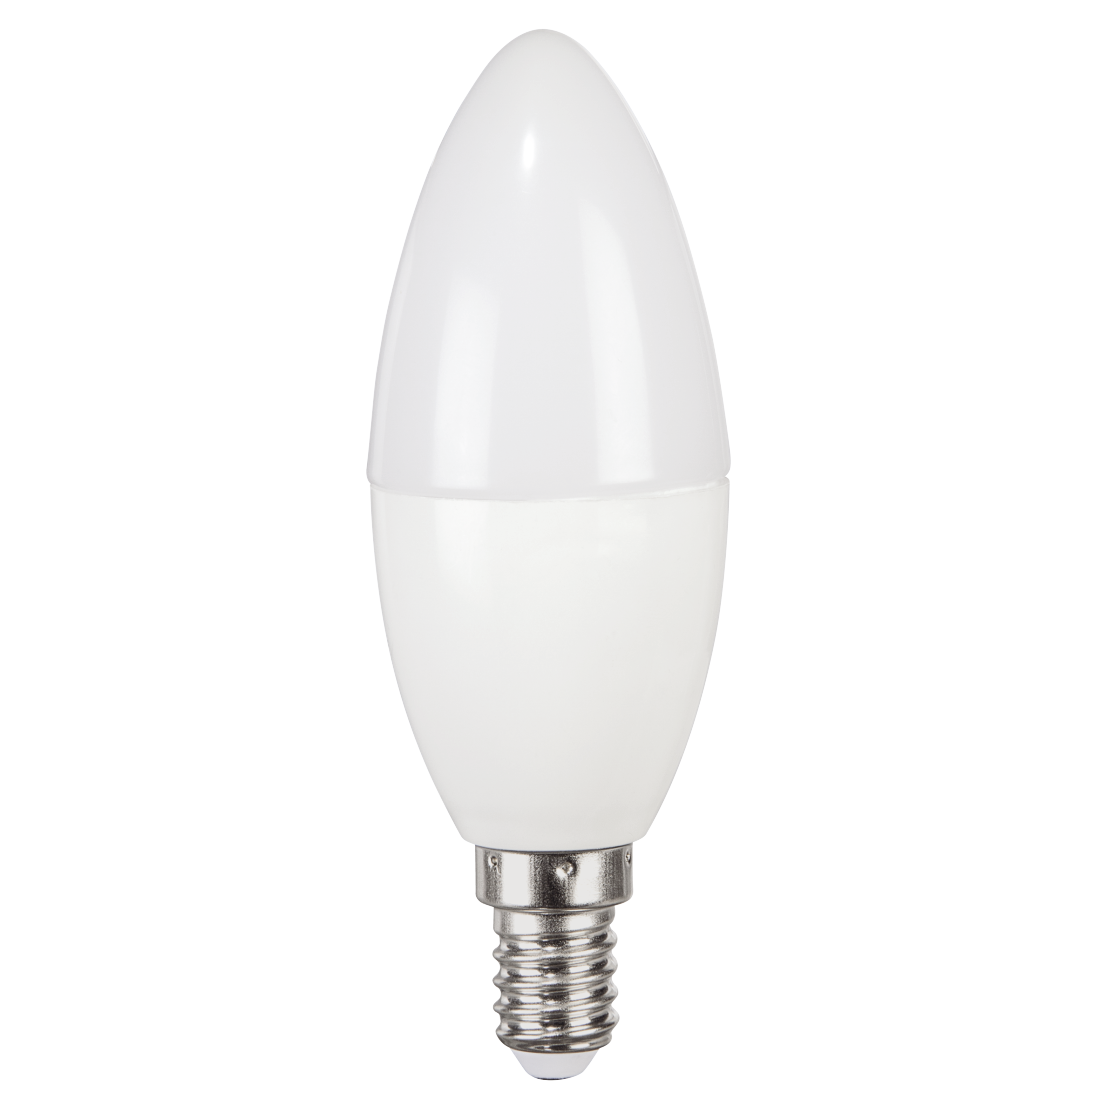 abx Druckfähige Abbildung - Xavax, LED-Lampe, E14, 806lm ersetzt 60W, Kerzenlampe, Warmweiß